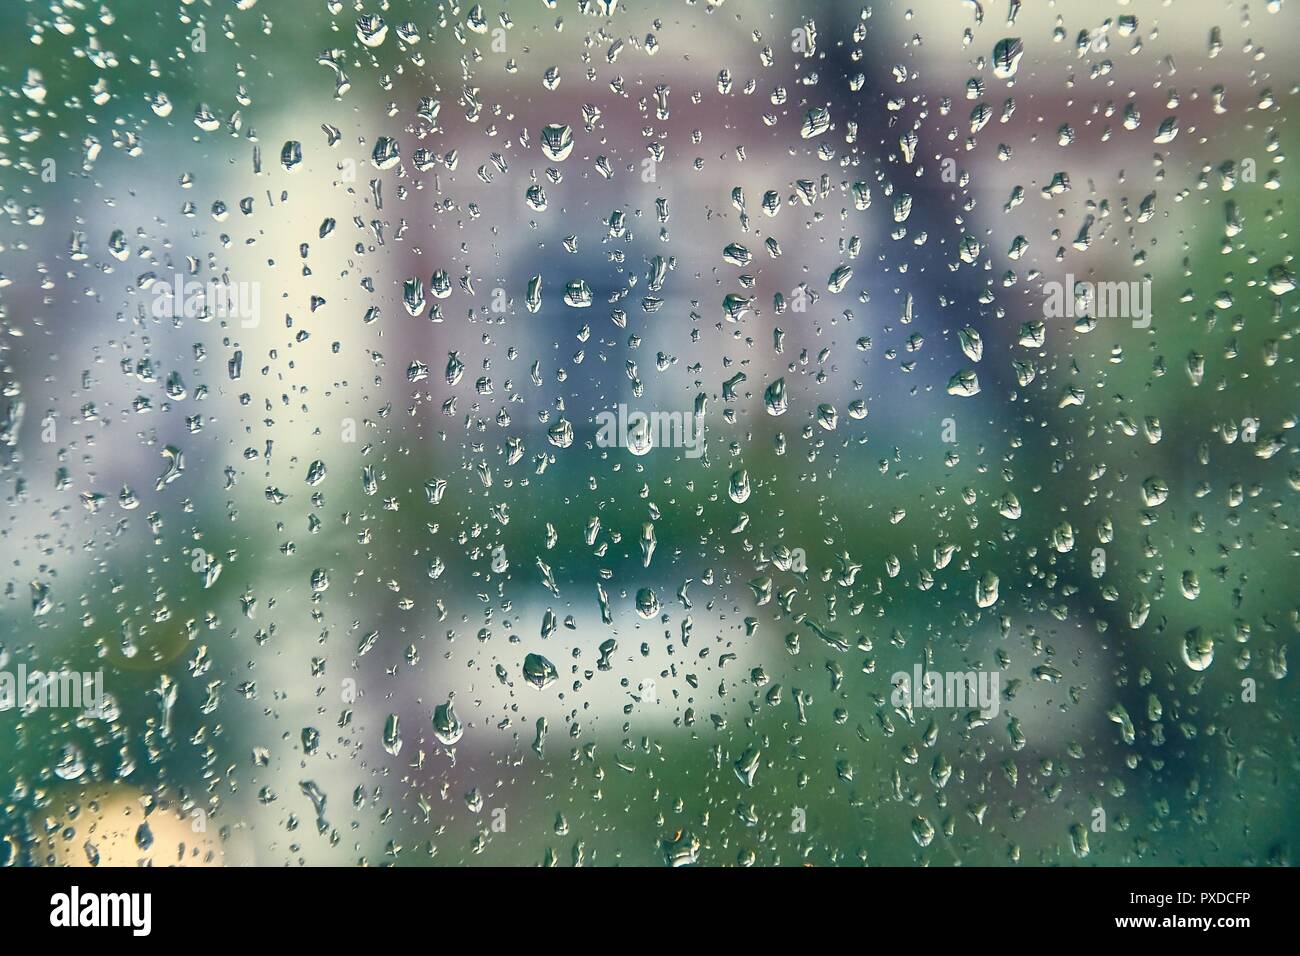 Rainy window surface Stock Photo